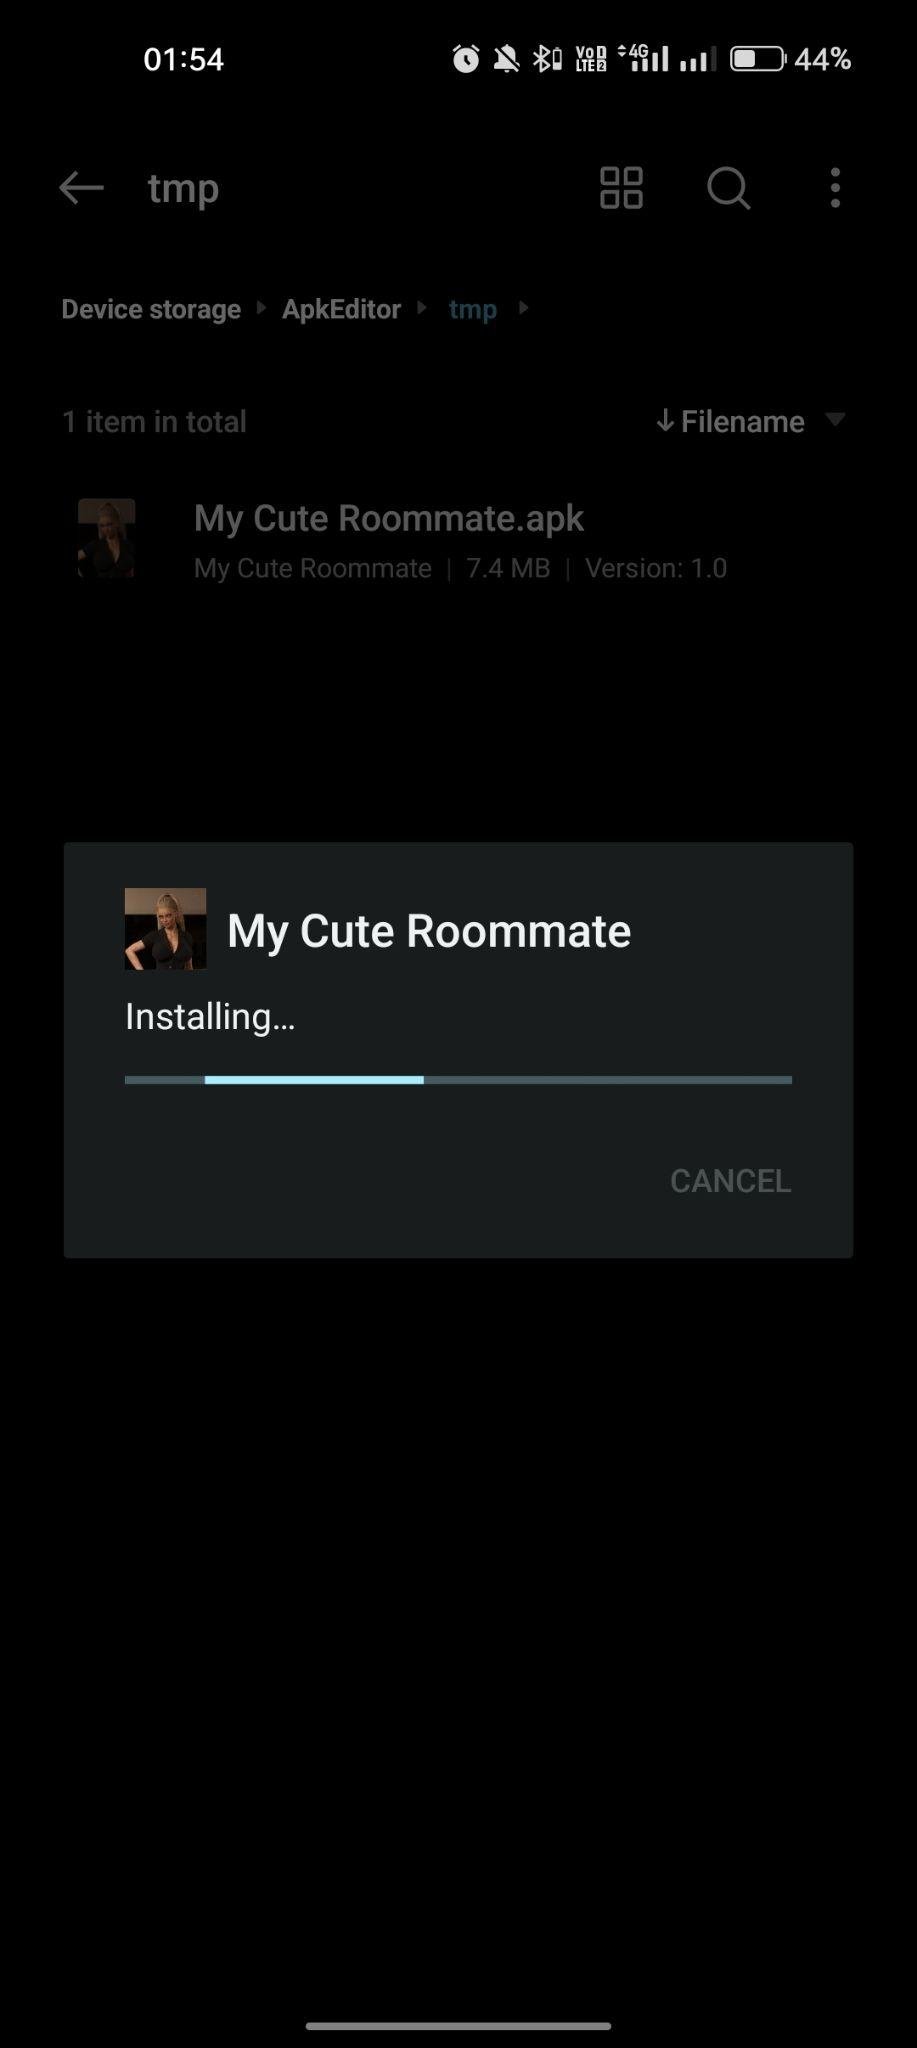 My Cute Roommate apk installing